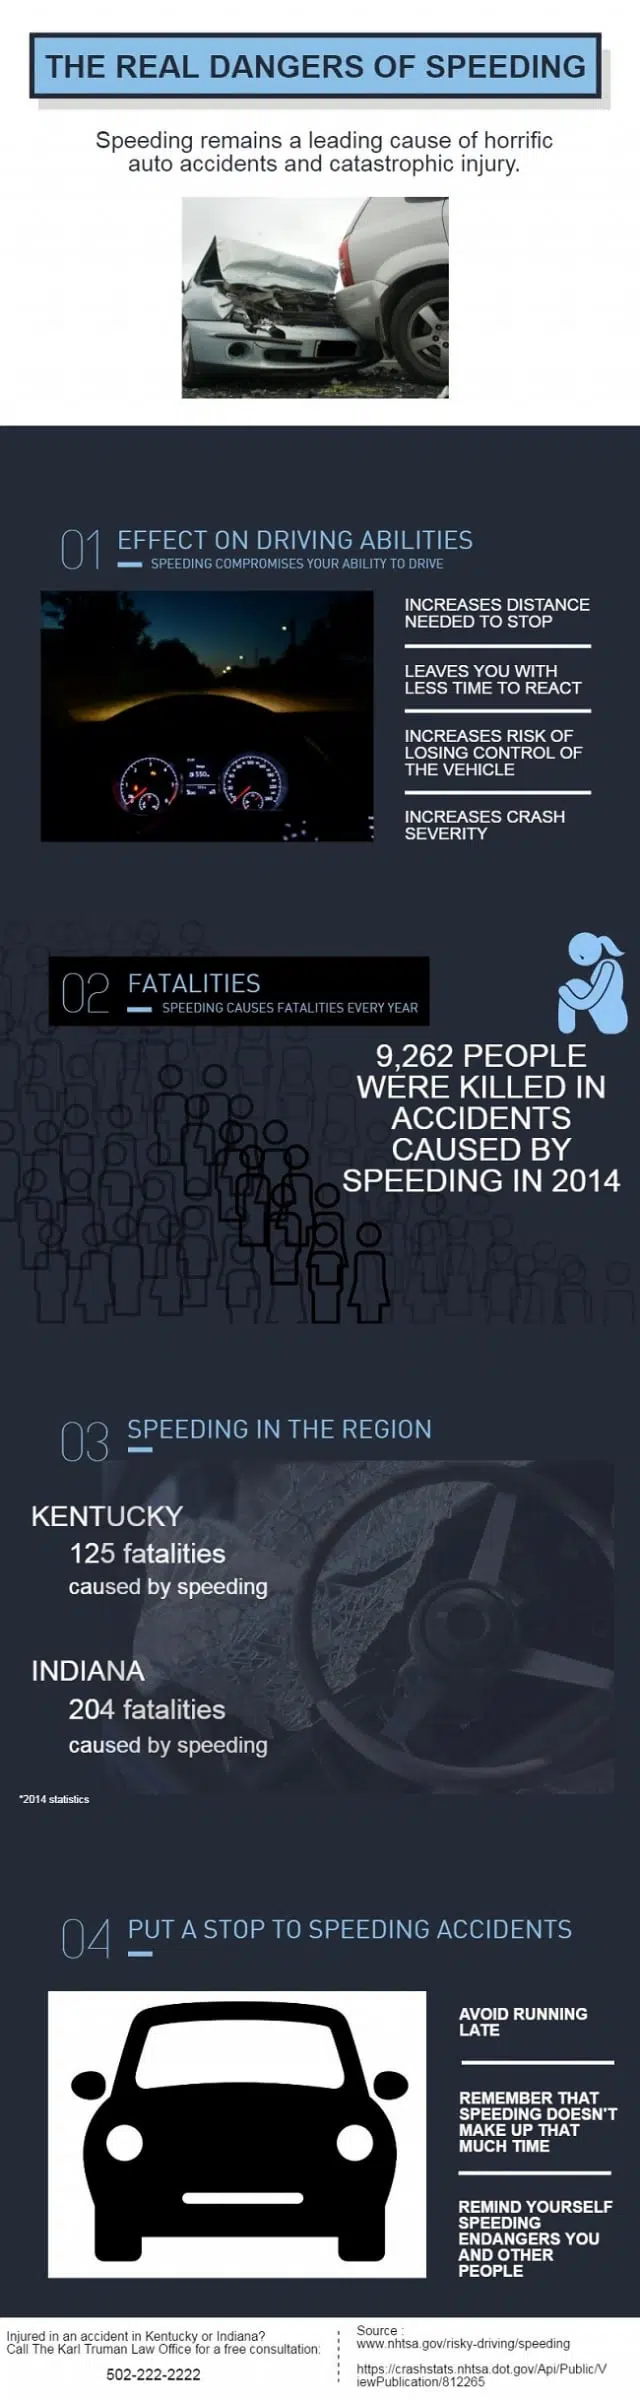 Speeding car accident infographic